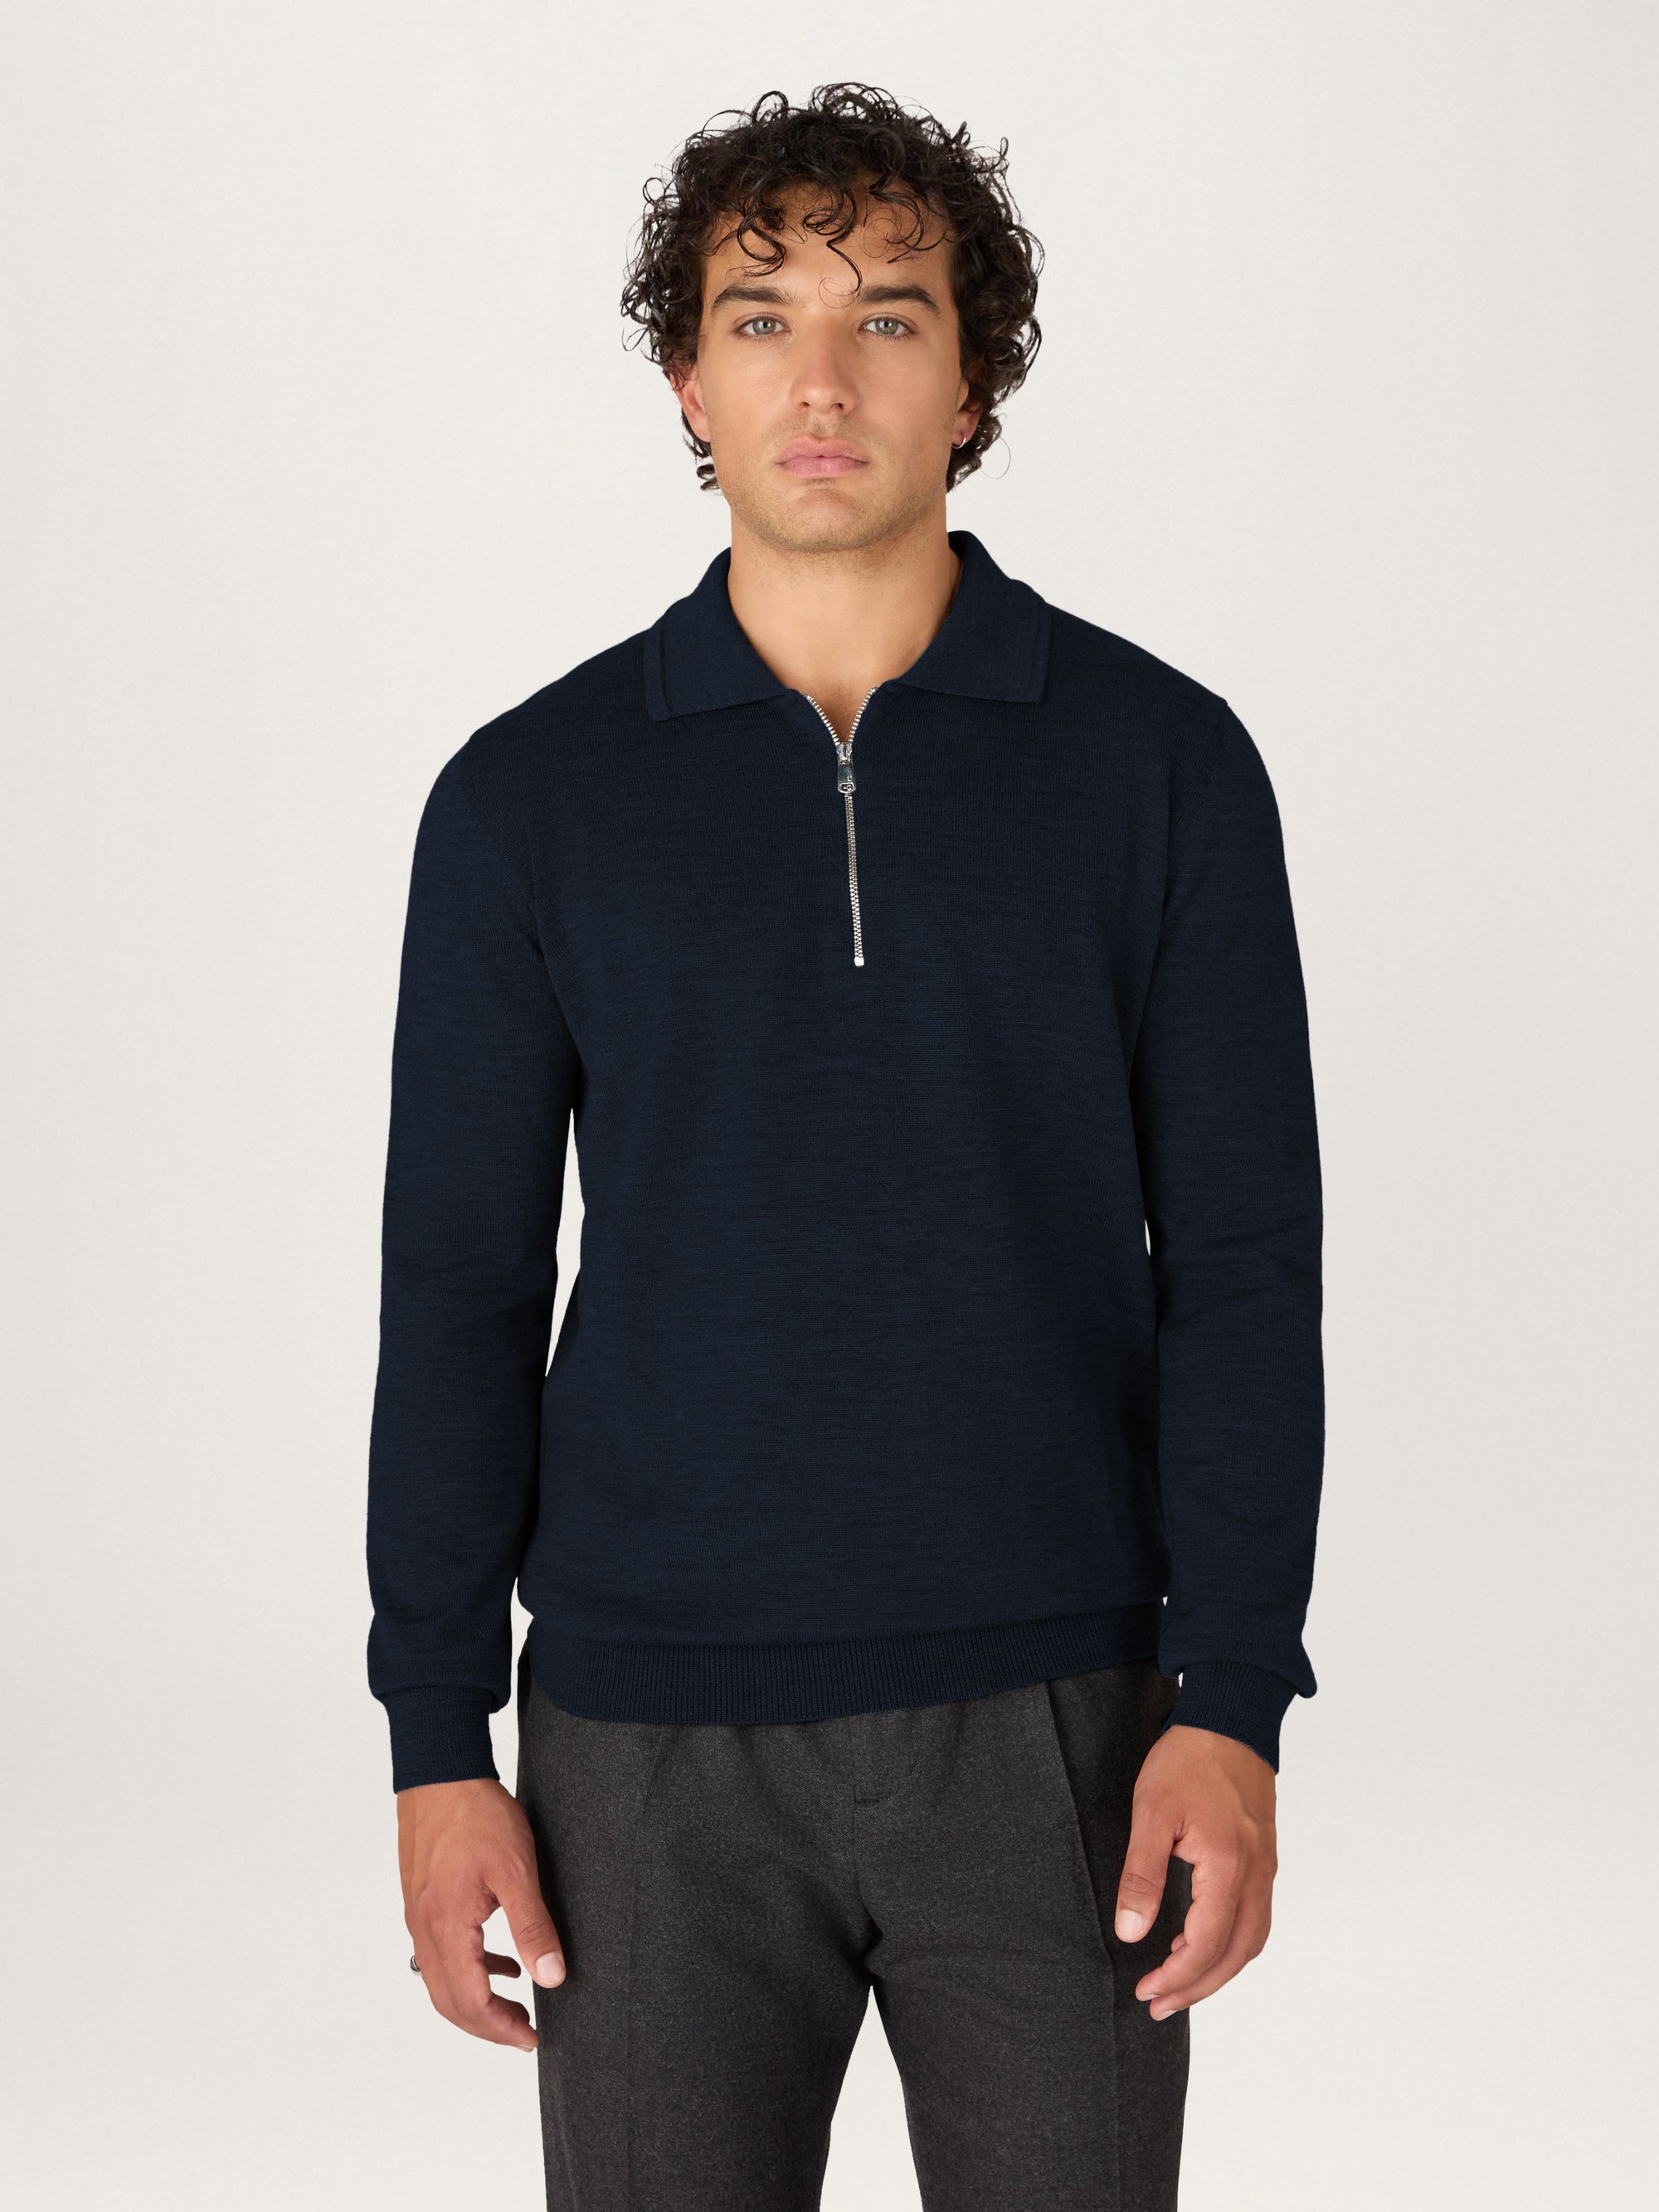 The Lightweight Easy Zip Sweater || Navy | Merino Wool